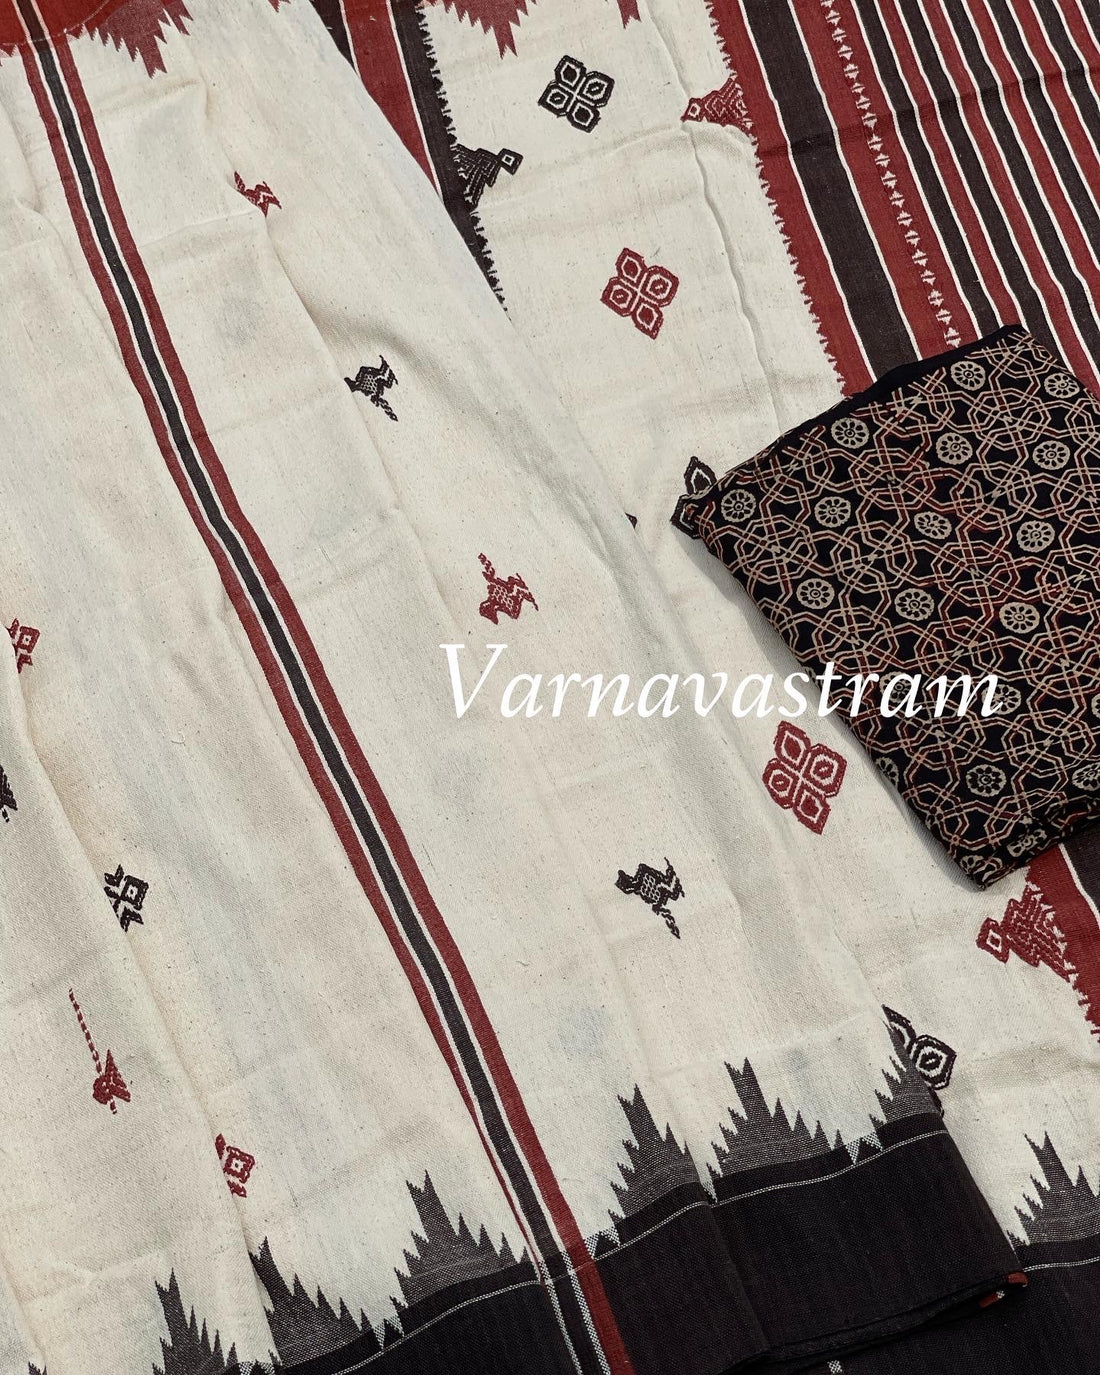 Kotpad weave Odisha Cotton Saree